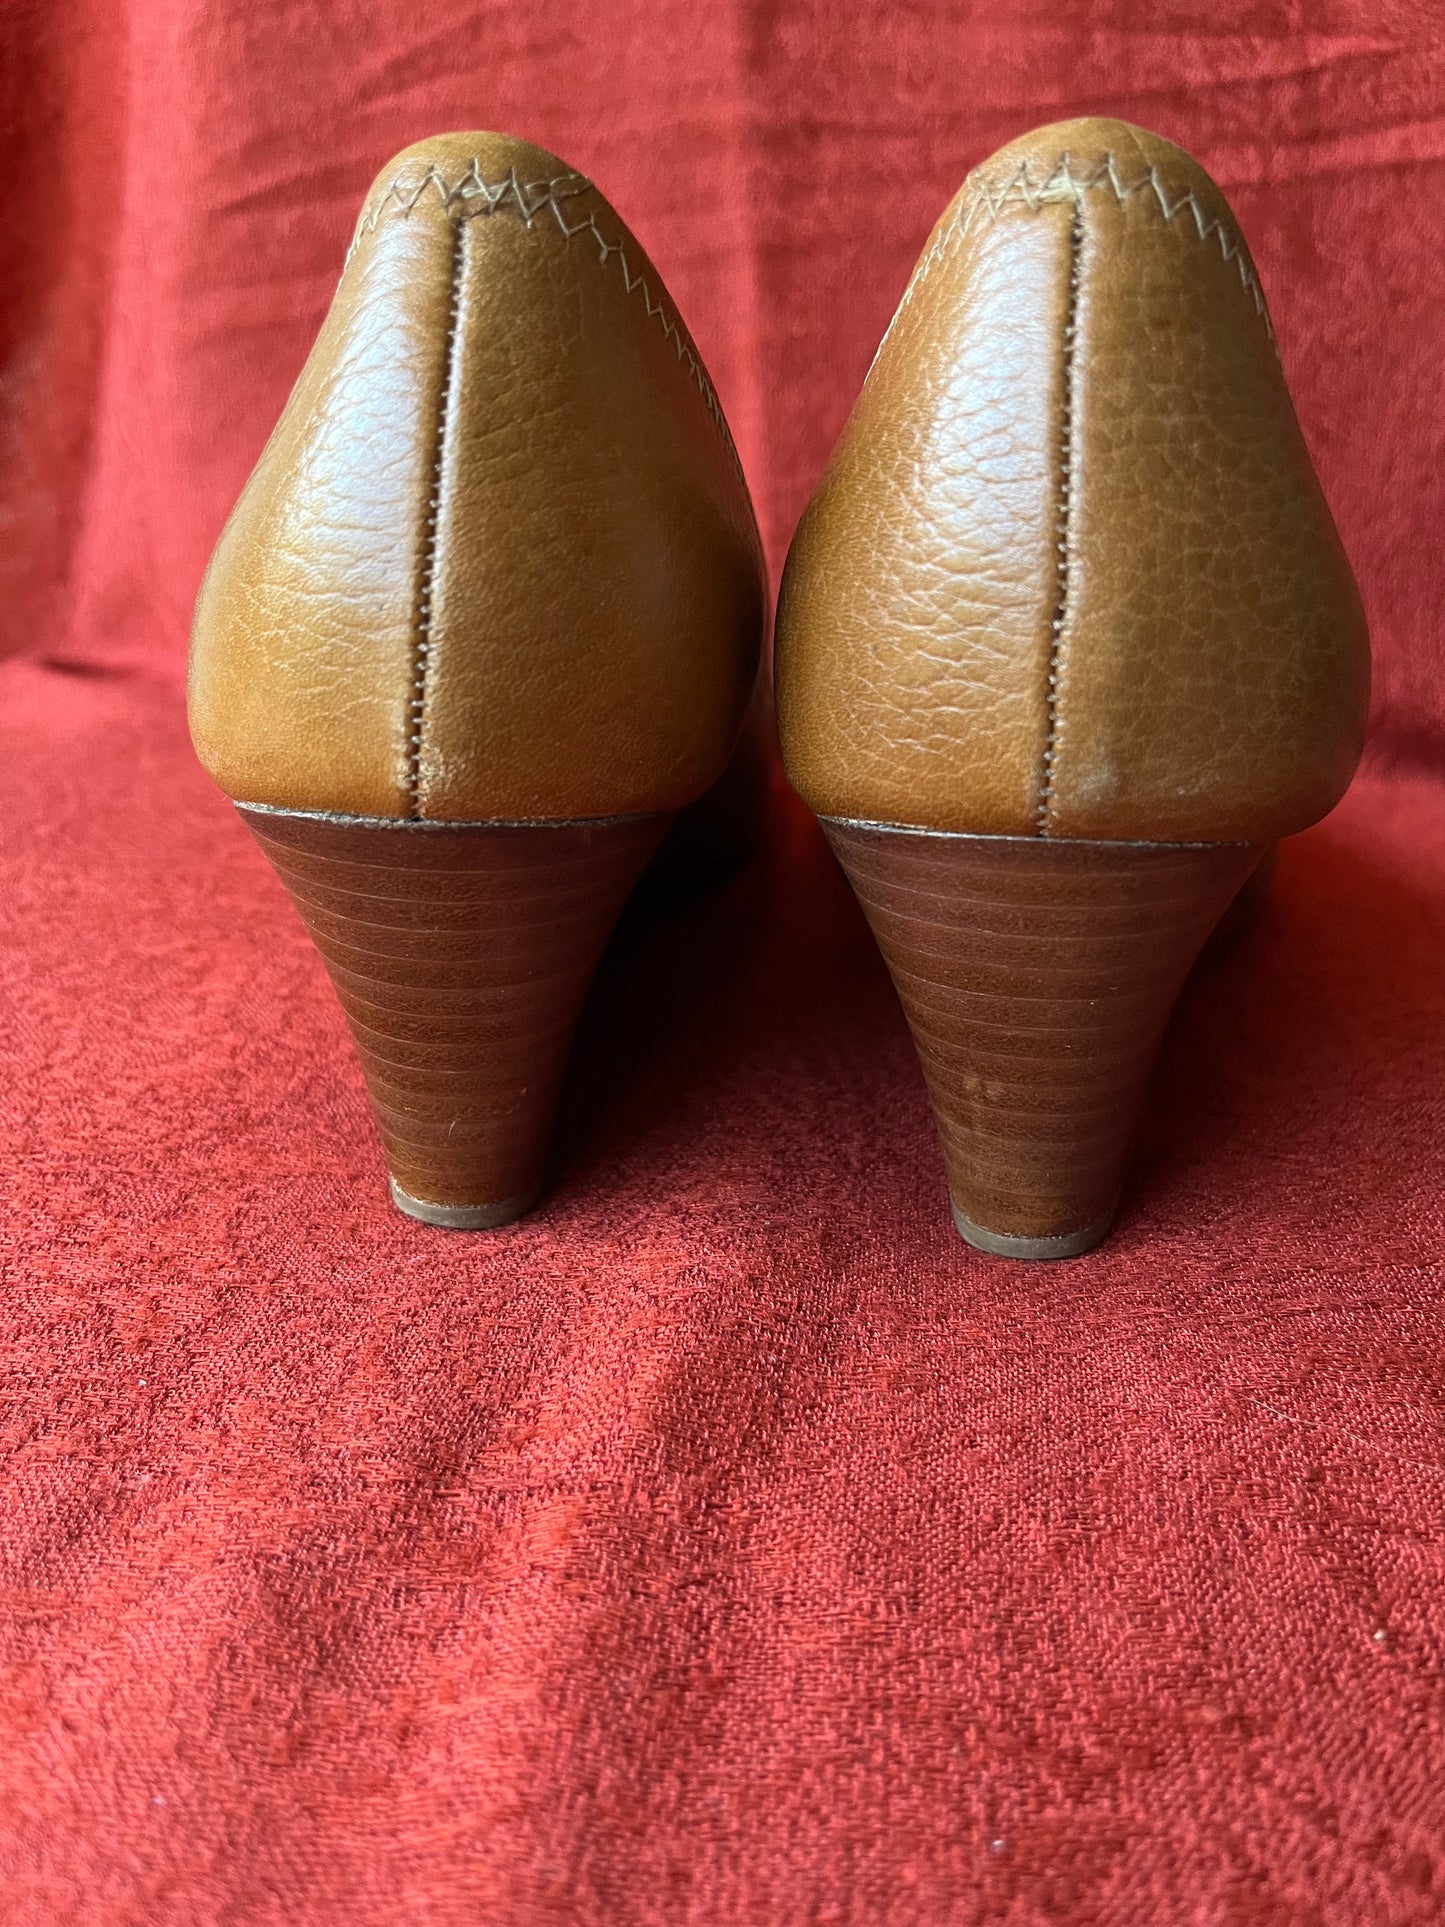 Tory Burch Brown Leather Julianne Peep Toe Wedge Heels-Size 8M